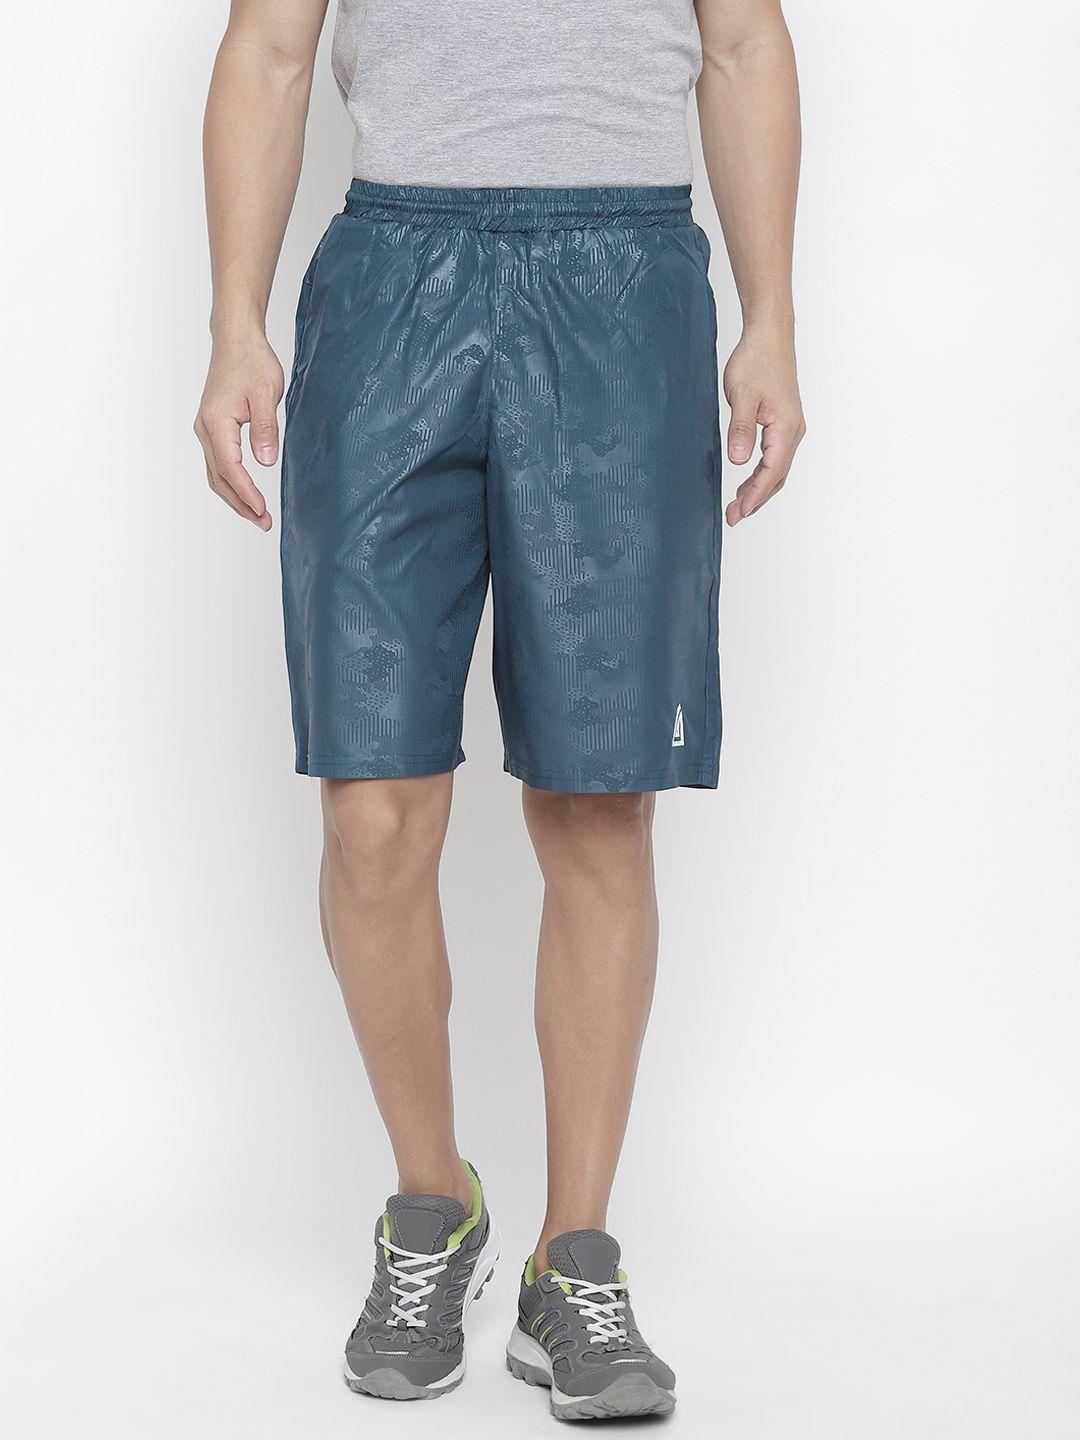 aesthetic bodies men teal blue printed slim fit sports shorts